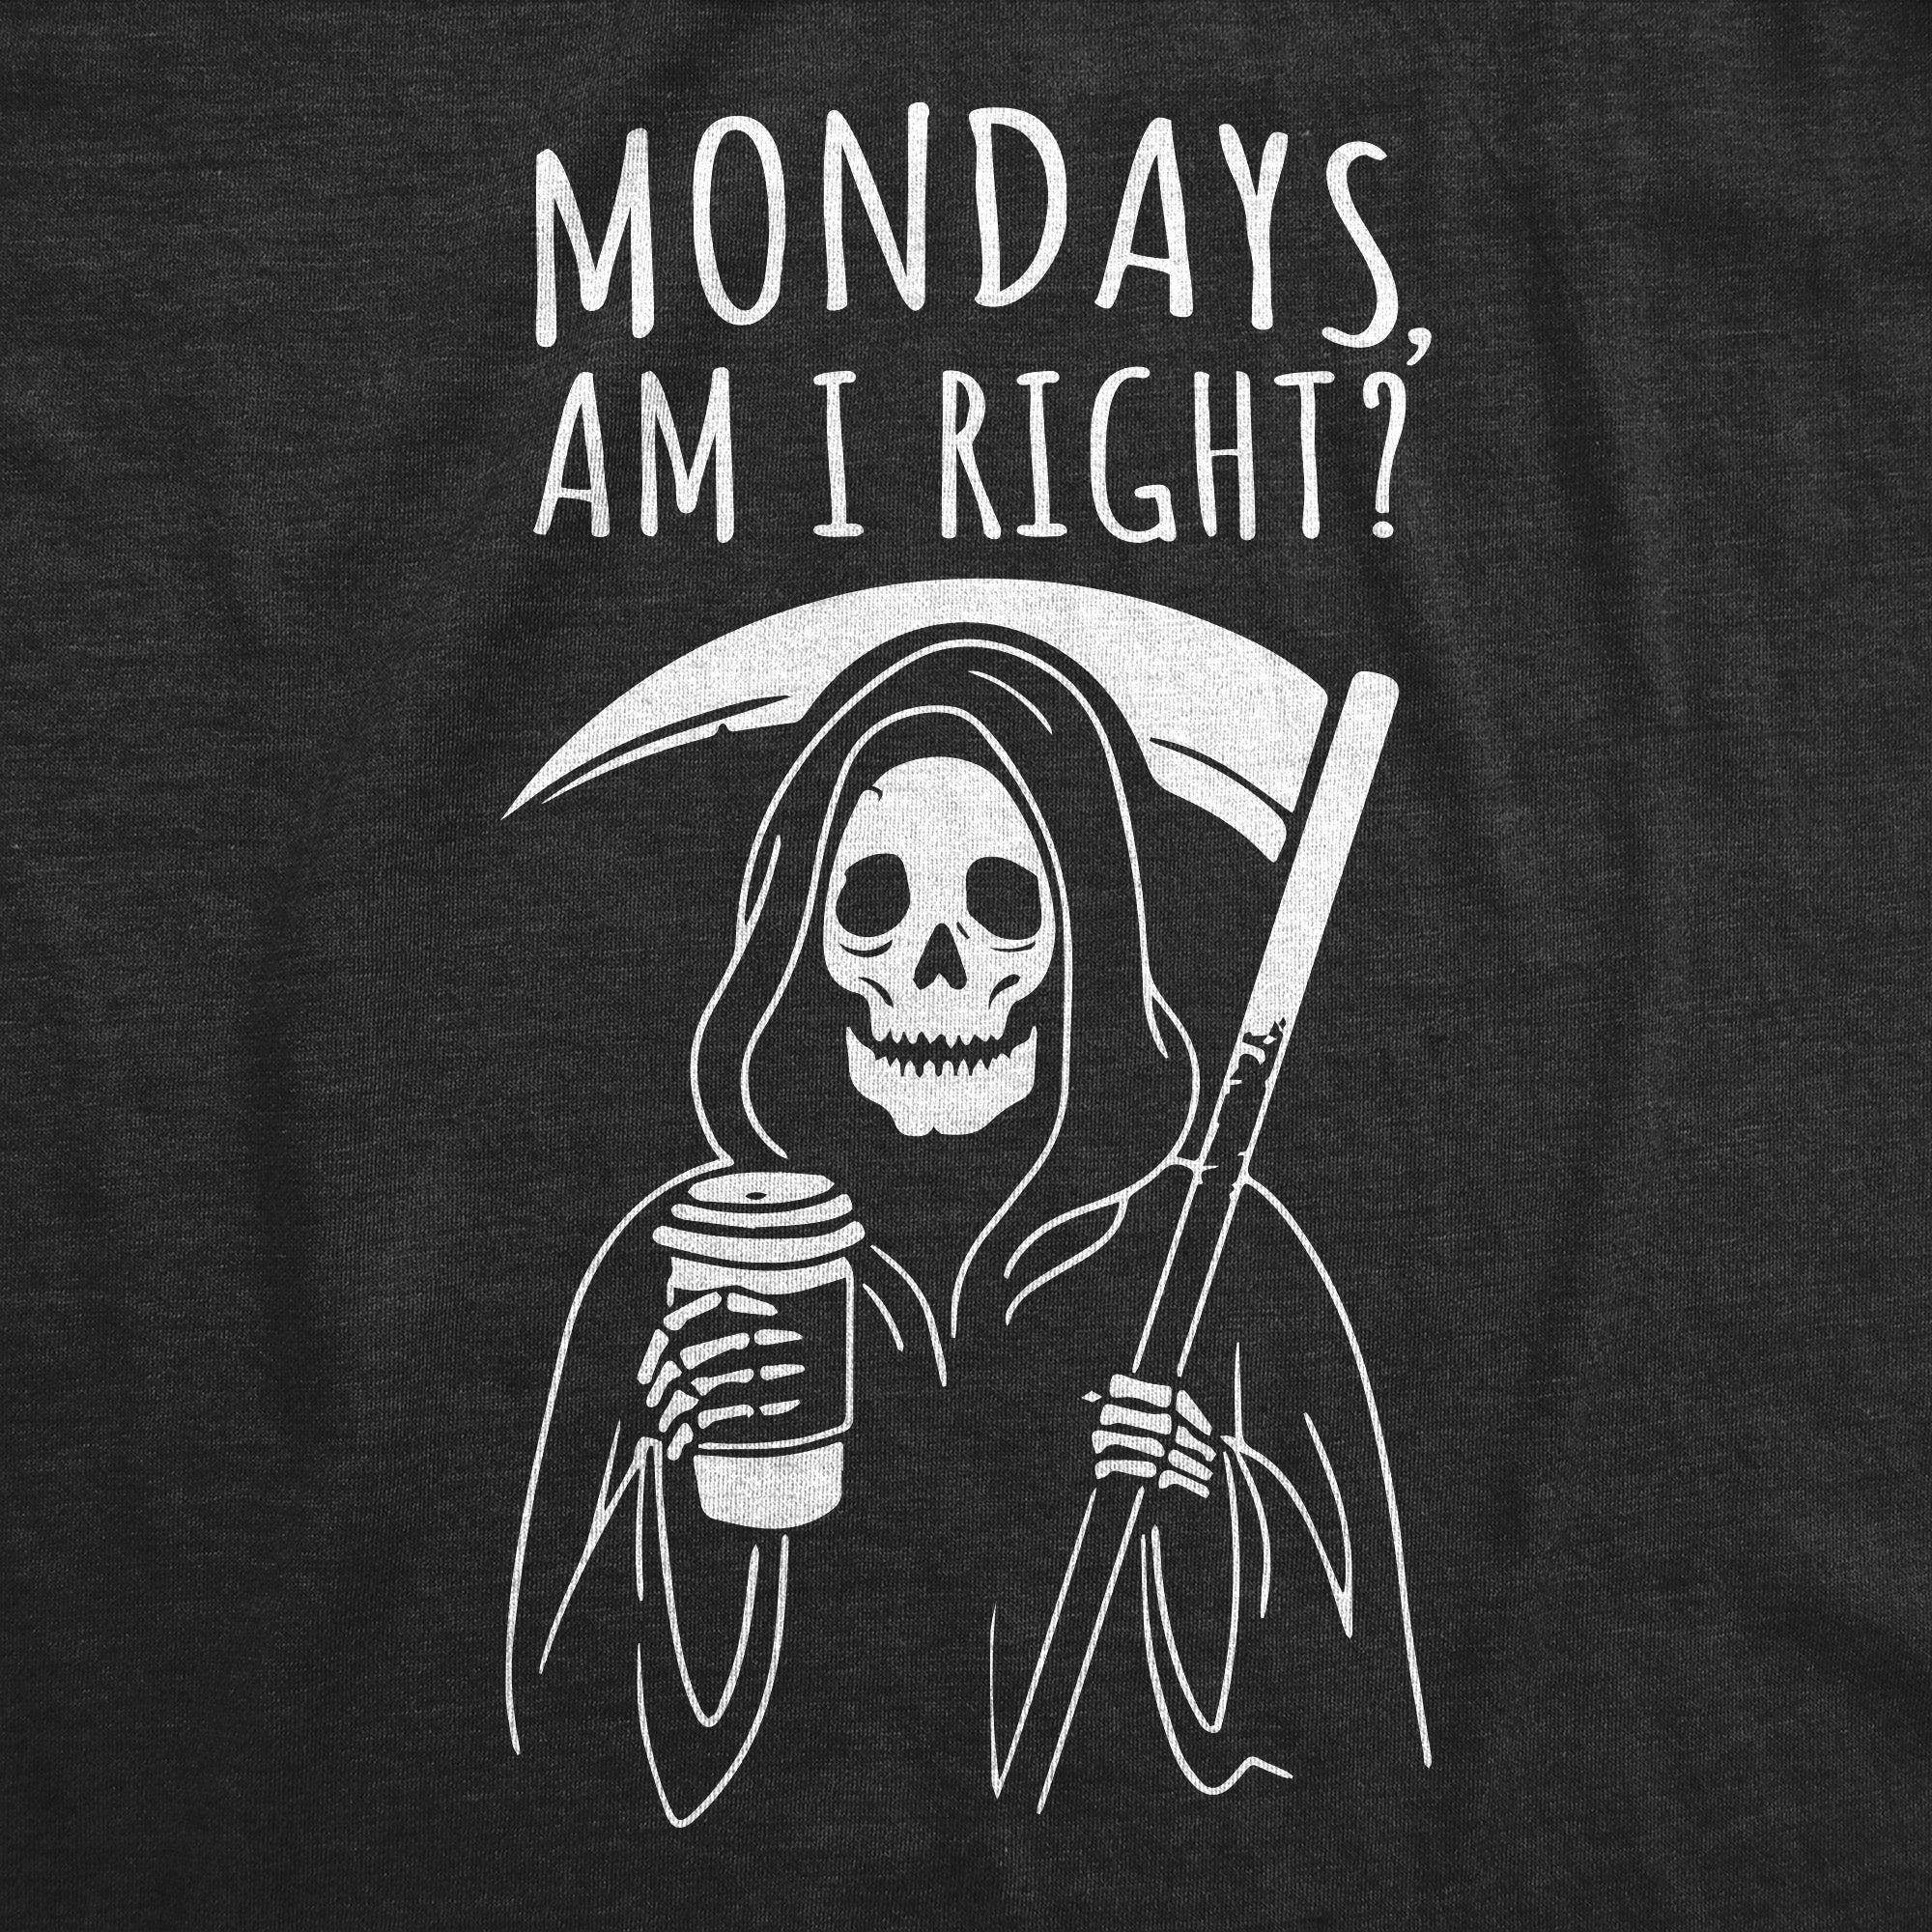 Funny Dark Heather Black - Mondays Am I Right Mondays Am I Right Mens T Shirt Nerdy Sarcastic Tee